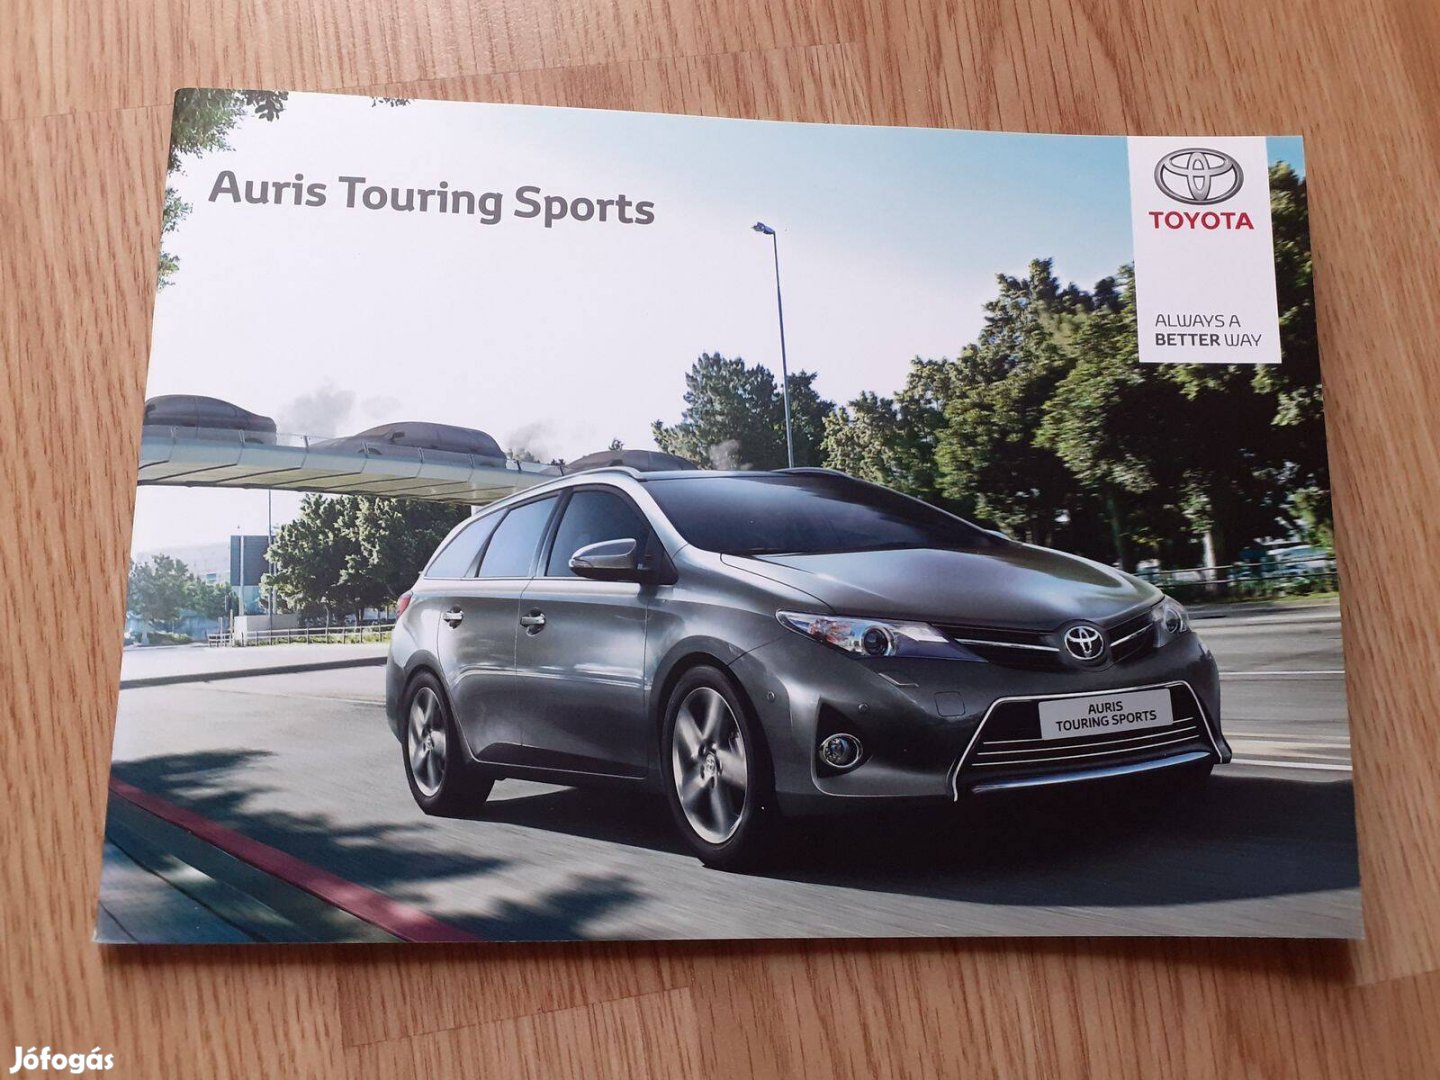 Toyota Auris Touring Sports prospektus - 2013, magyar nyelvű